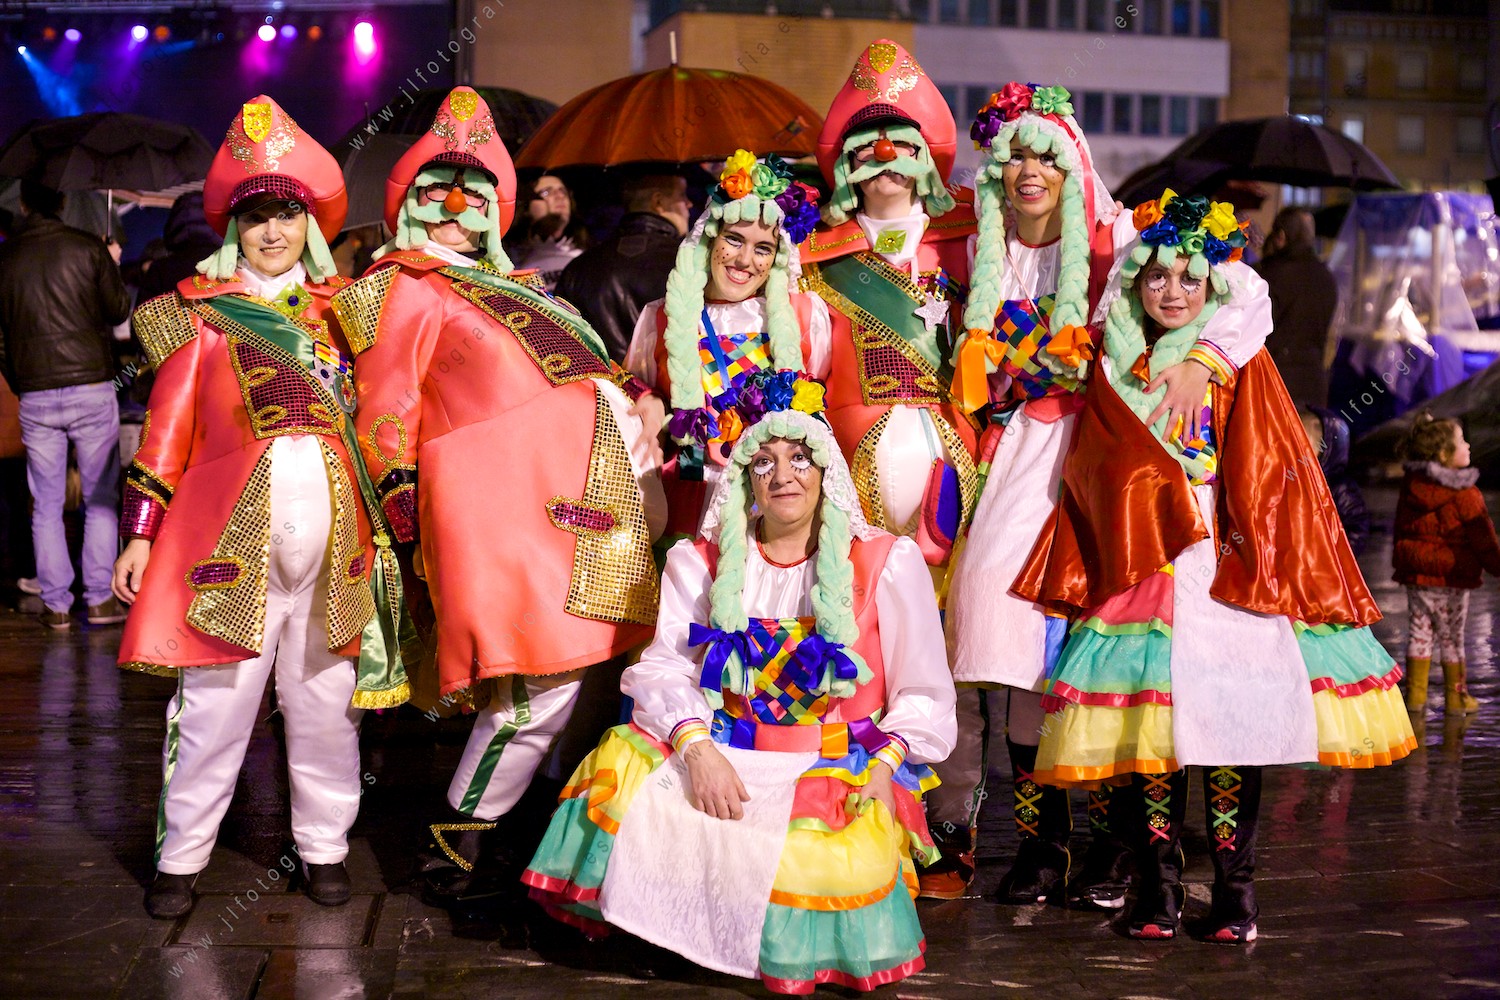 carnaval de Barakaldo, grupo de personas disfrazados de personajes infantiles 